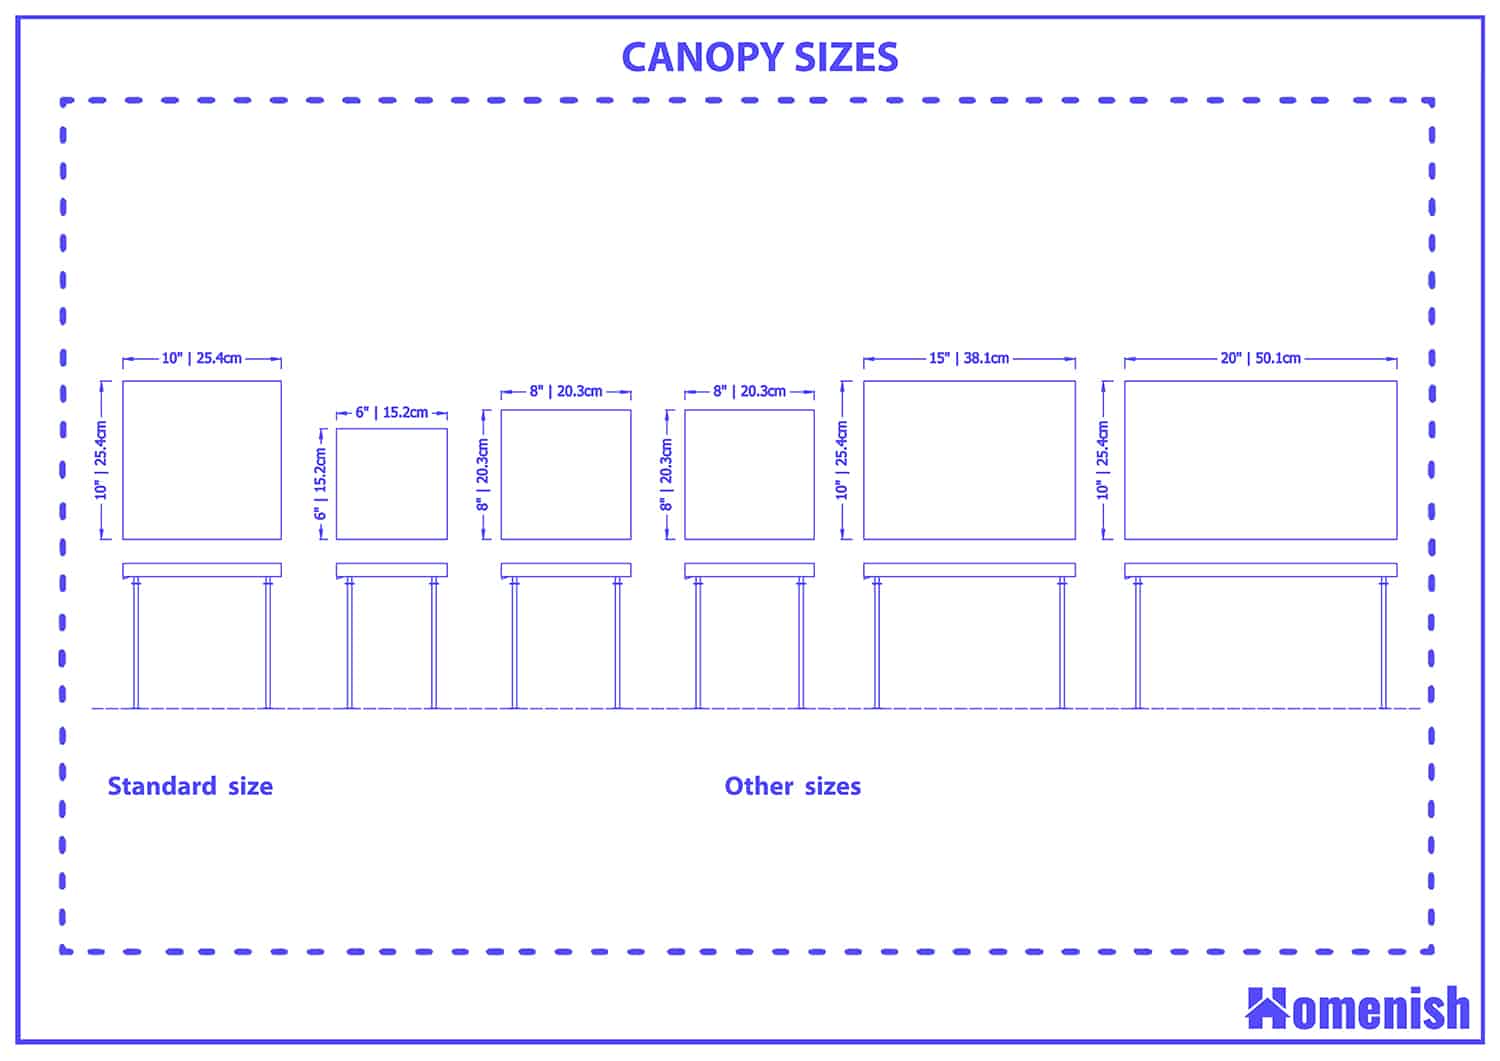 Canopy sizes